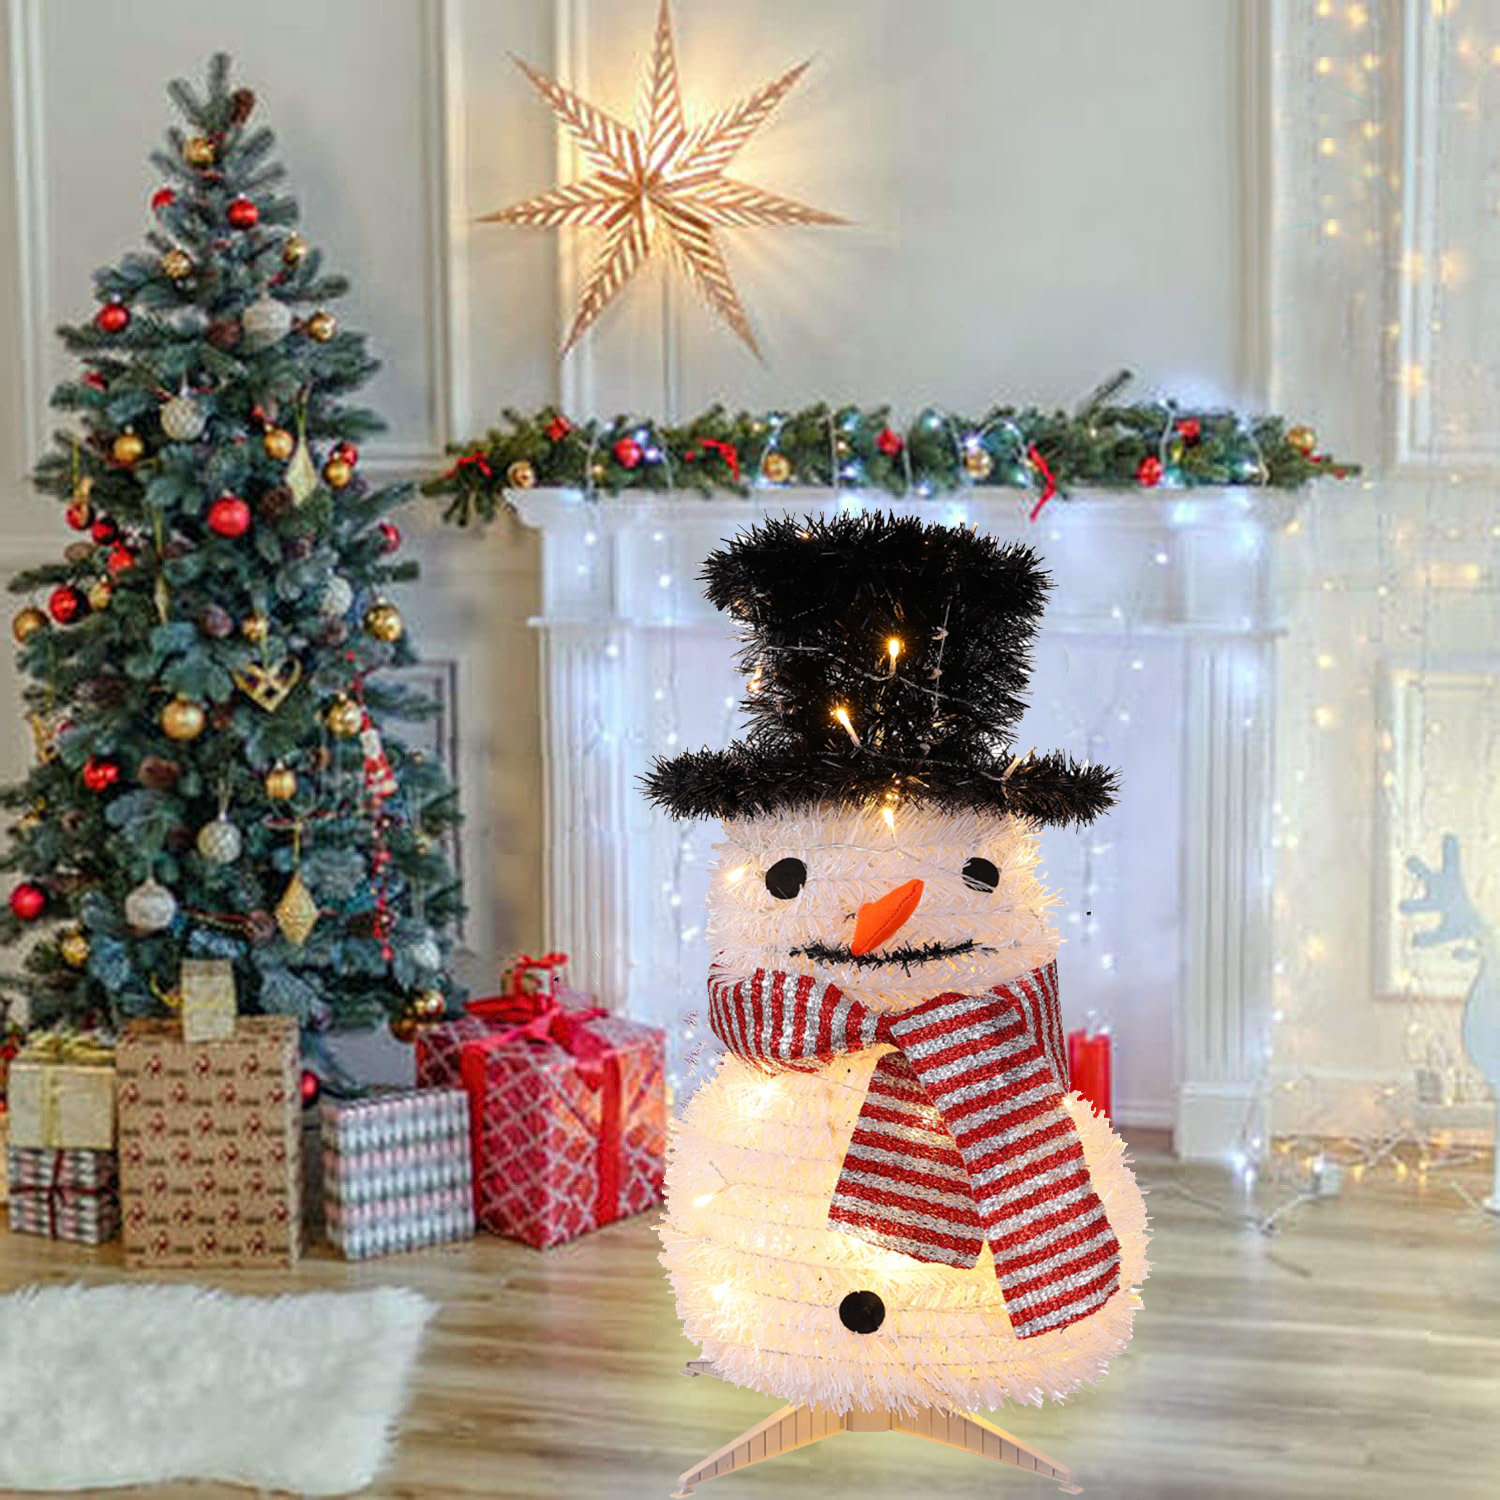 VP Home Glowing Lantern Christmas Snowman Decor LED Holiday Light